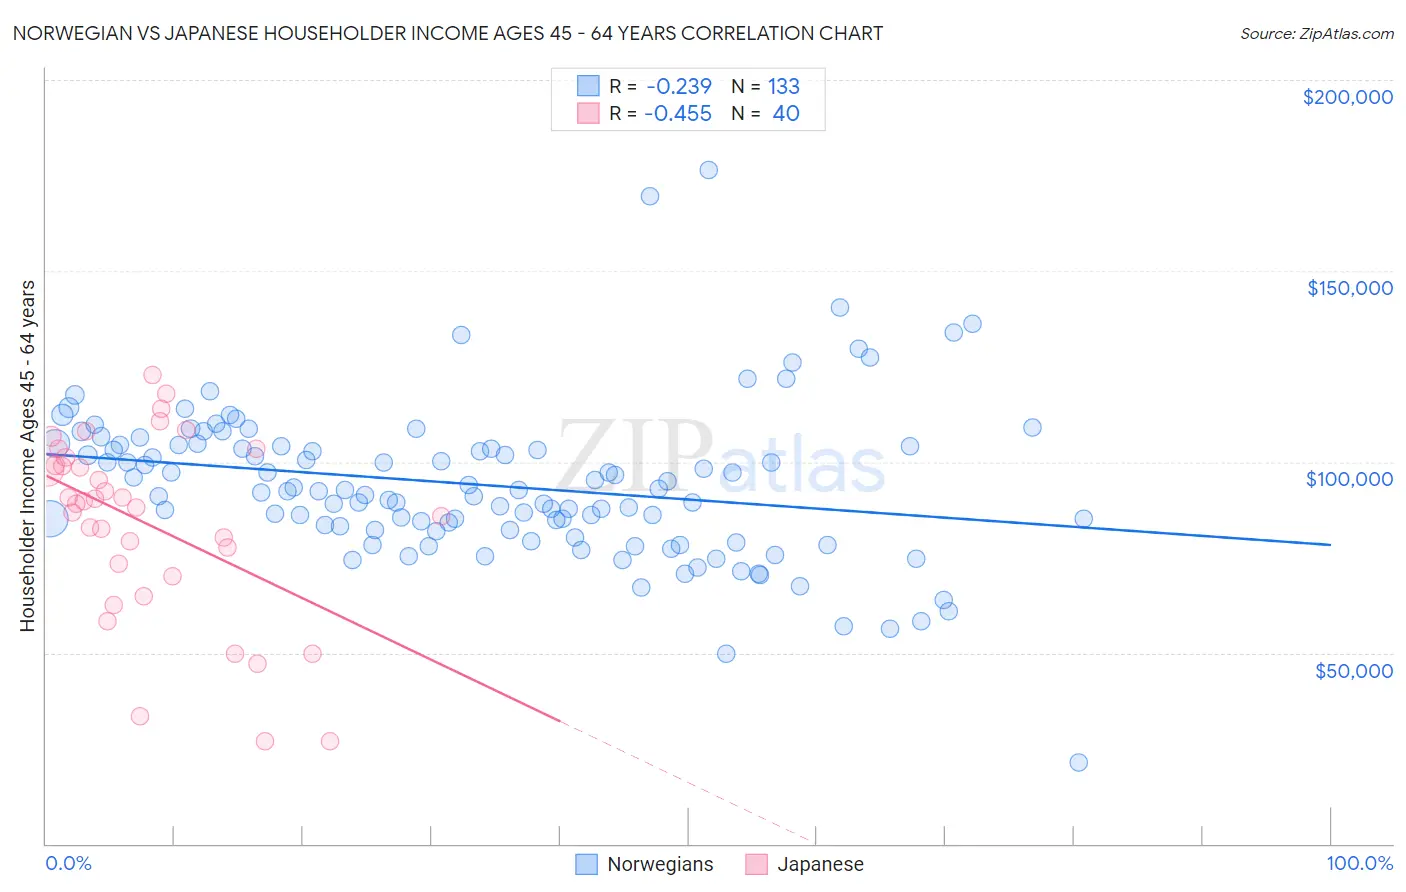 Norwegian vs Japanese Householder Income Ages 45 - 64 years